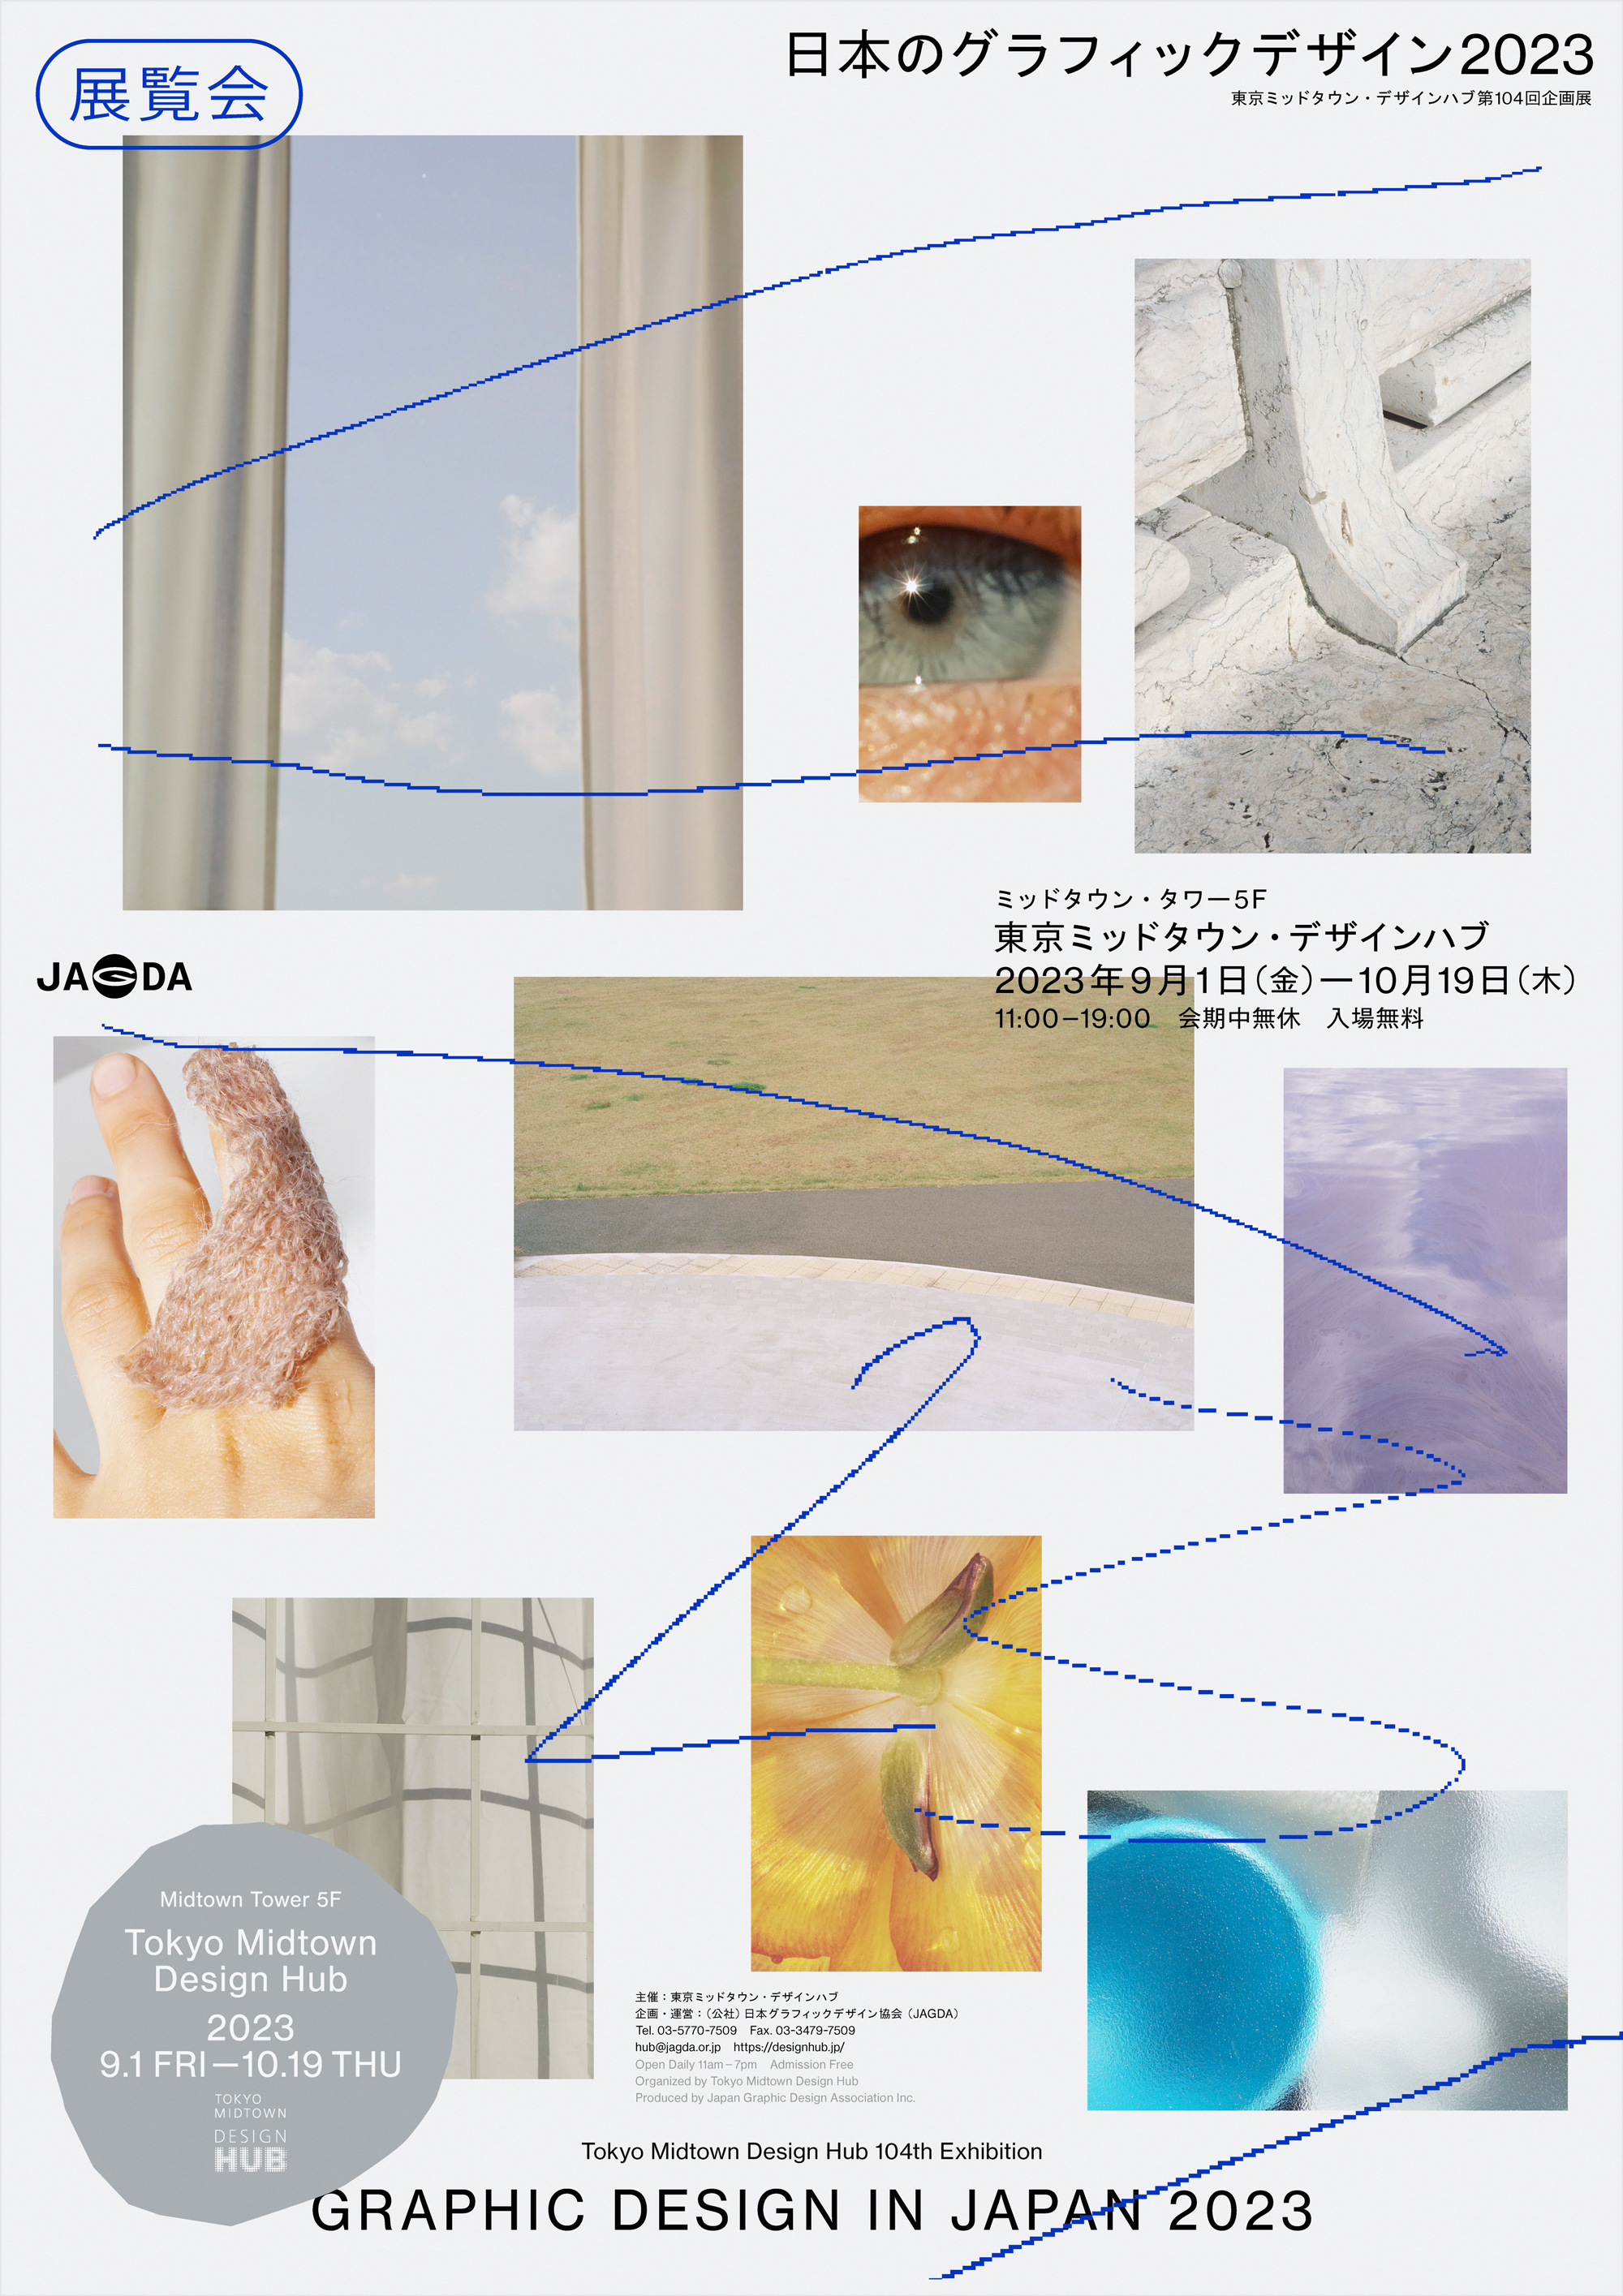 Graphic Design in Japan 2023 | Tokyo Midtown Design Hub